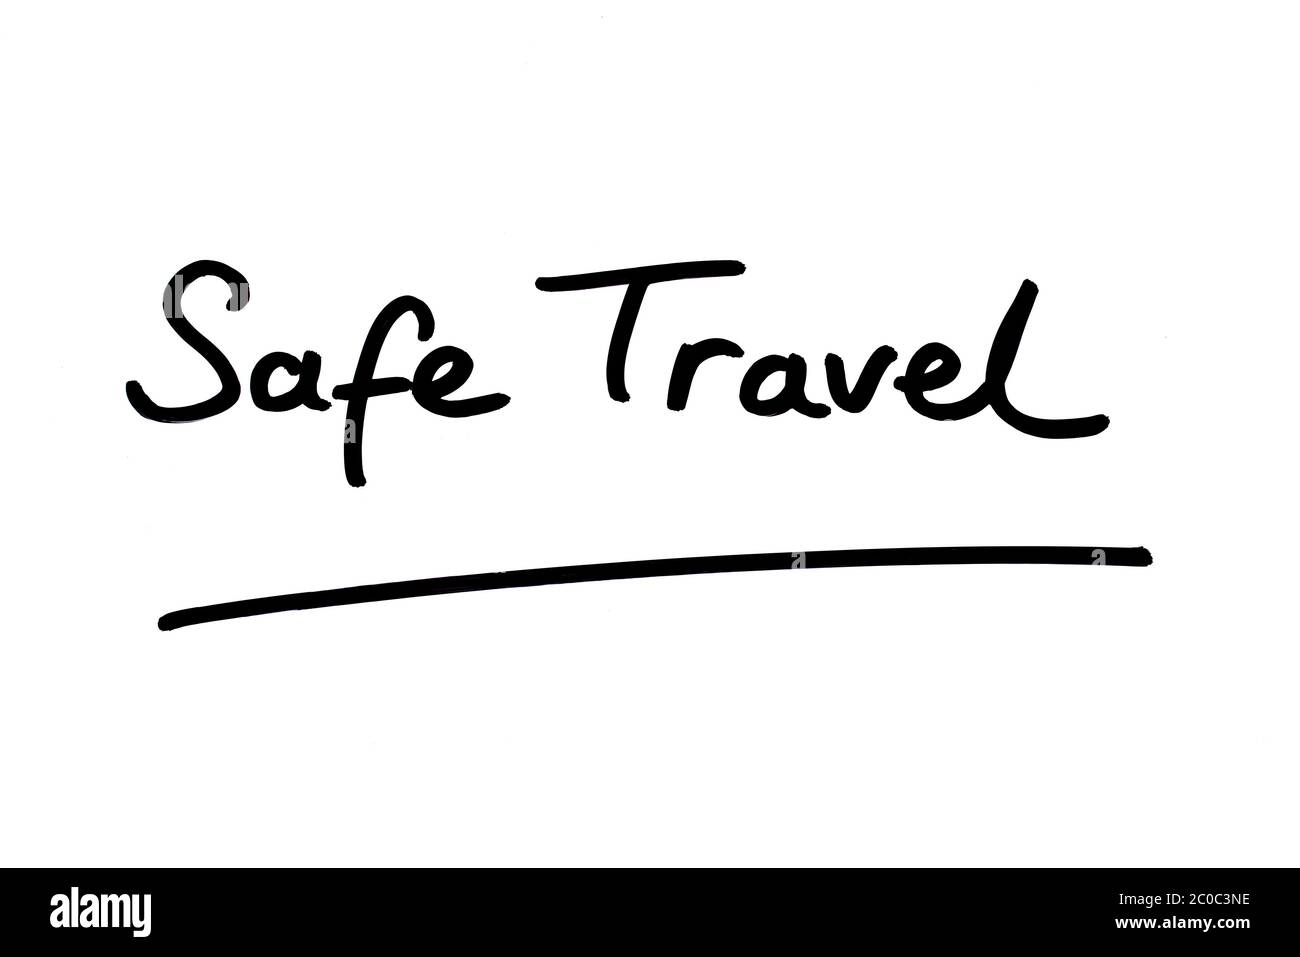 Safe Travel handwritten on a white background. Stock Photo